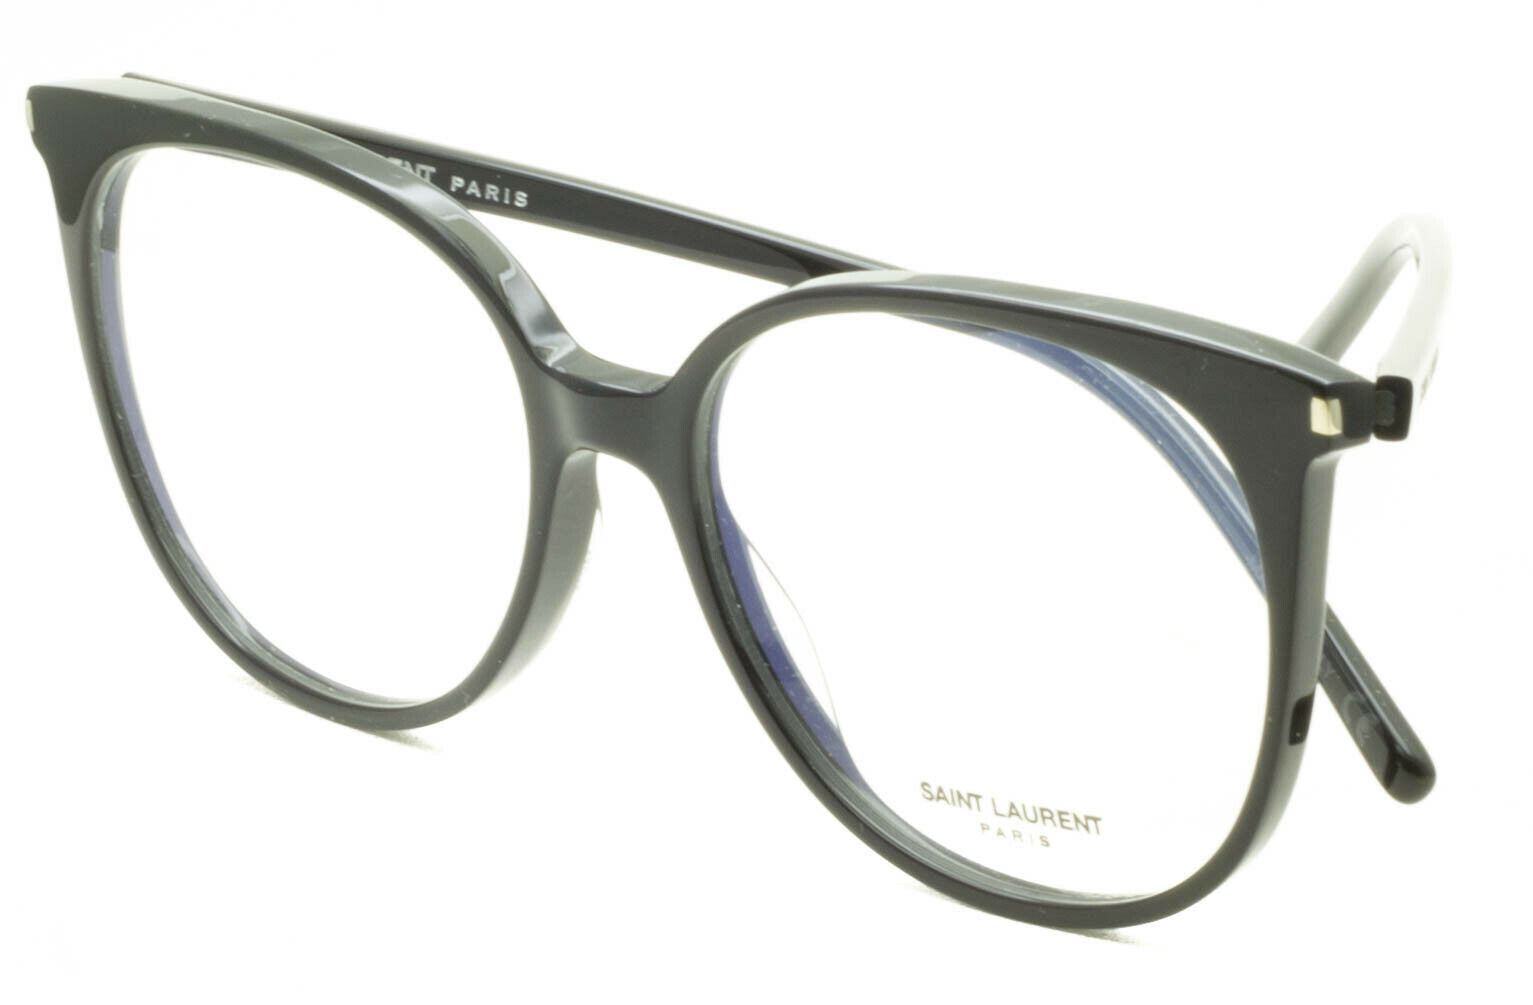 Saint Laurent Paris SL39 001 Eyewear FRAMES RX Optical Eyeglasses Glasses - New